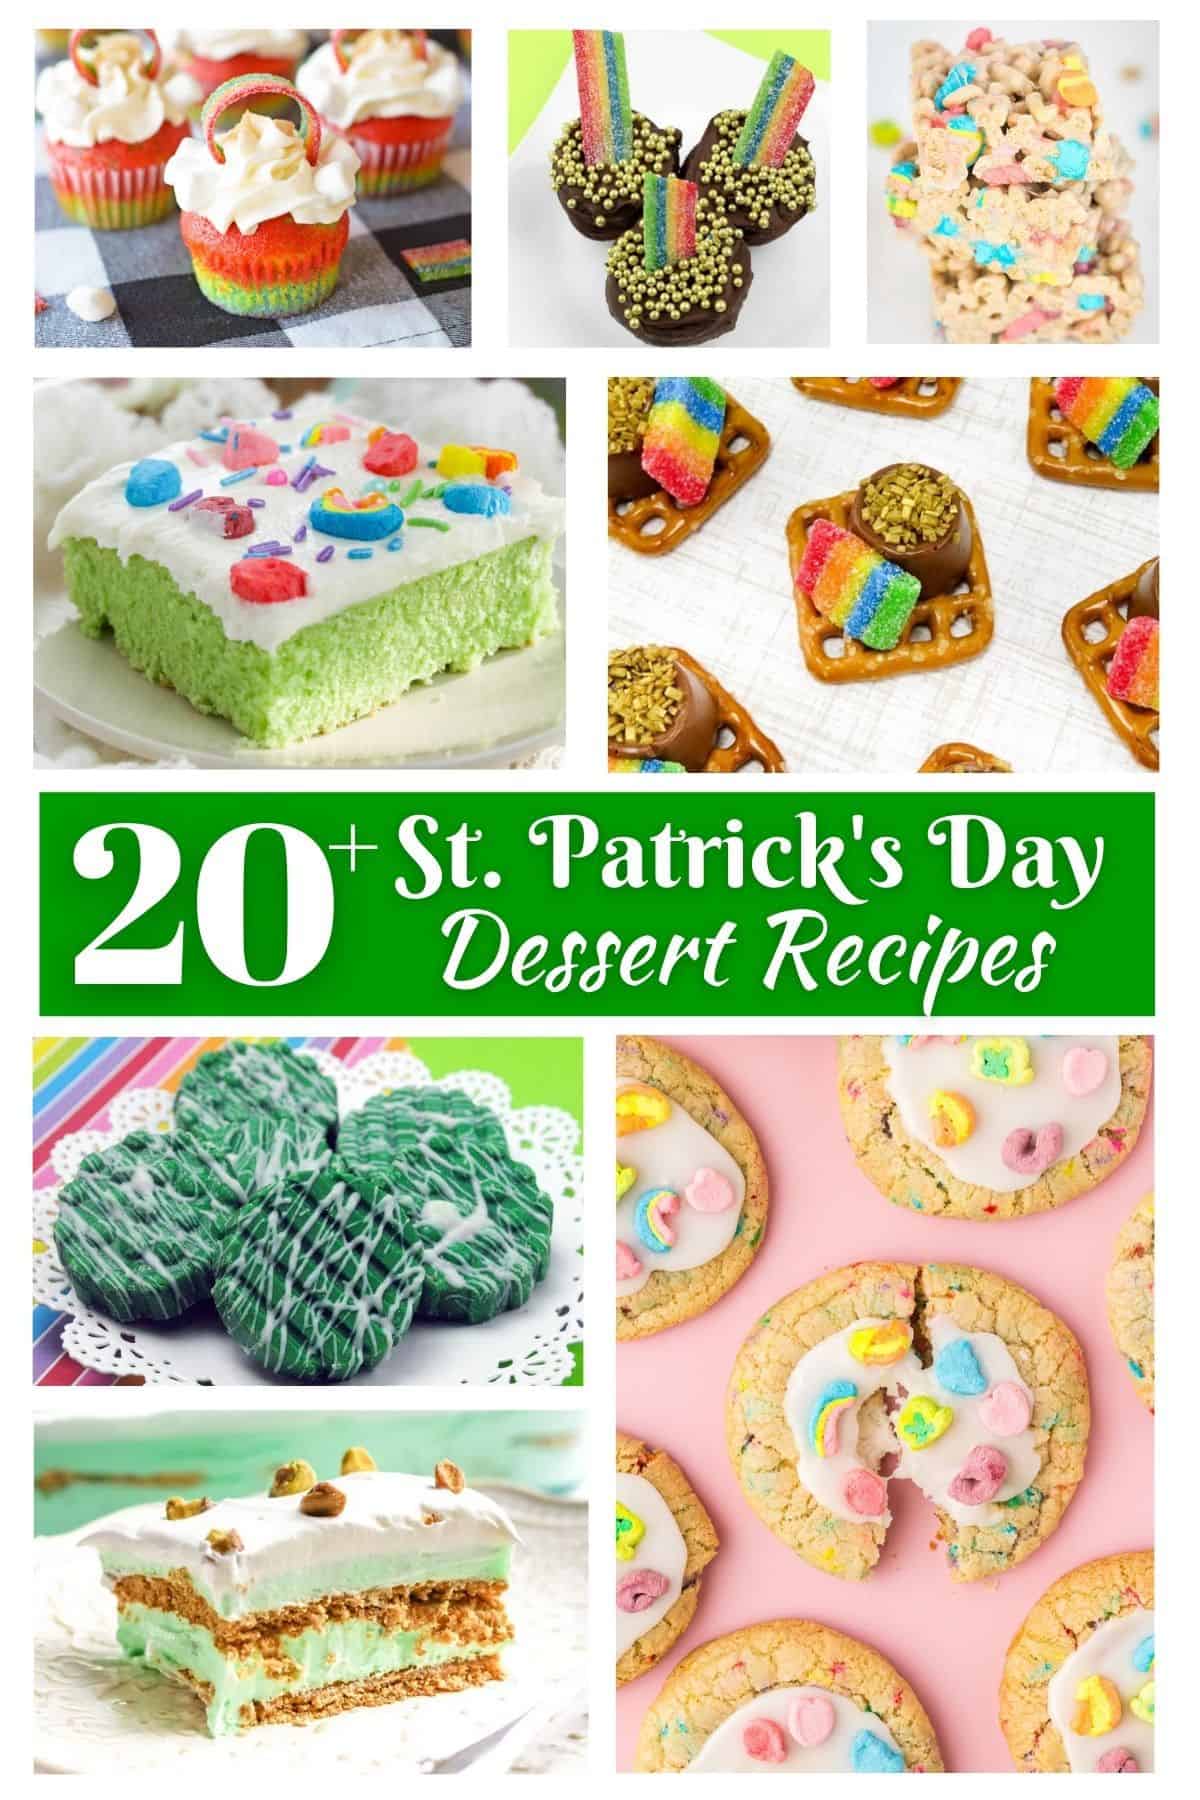 20+ St. Patrick's Day Dessert Recipes collage image.